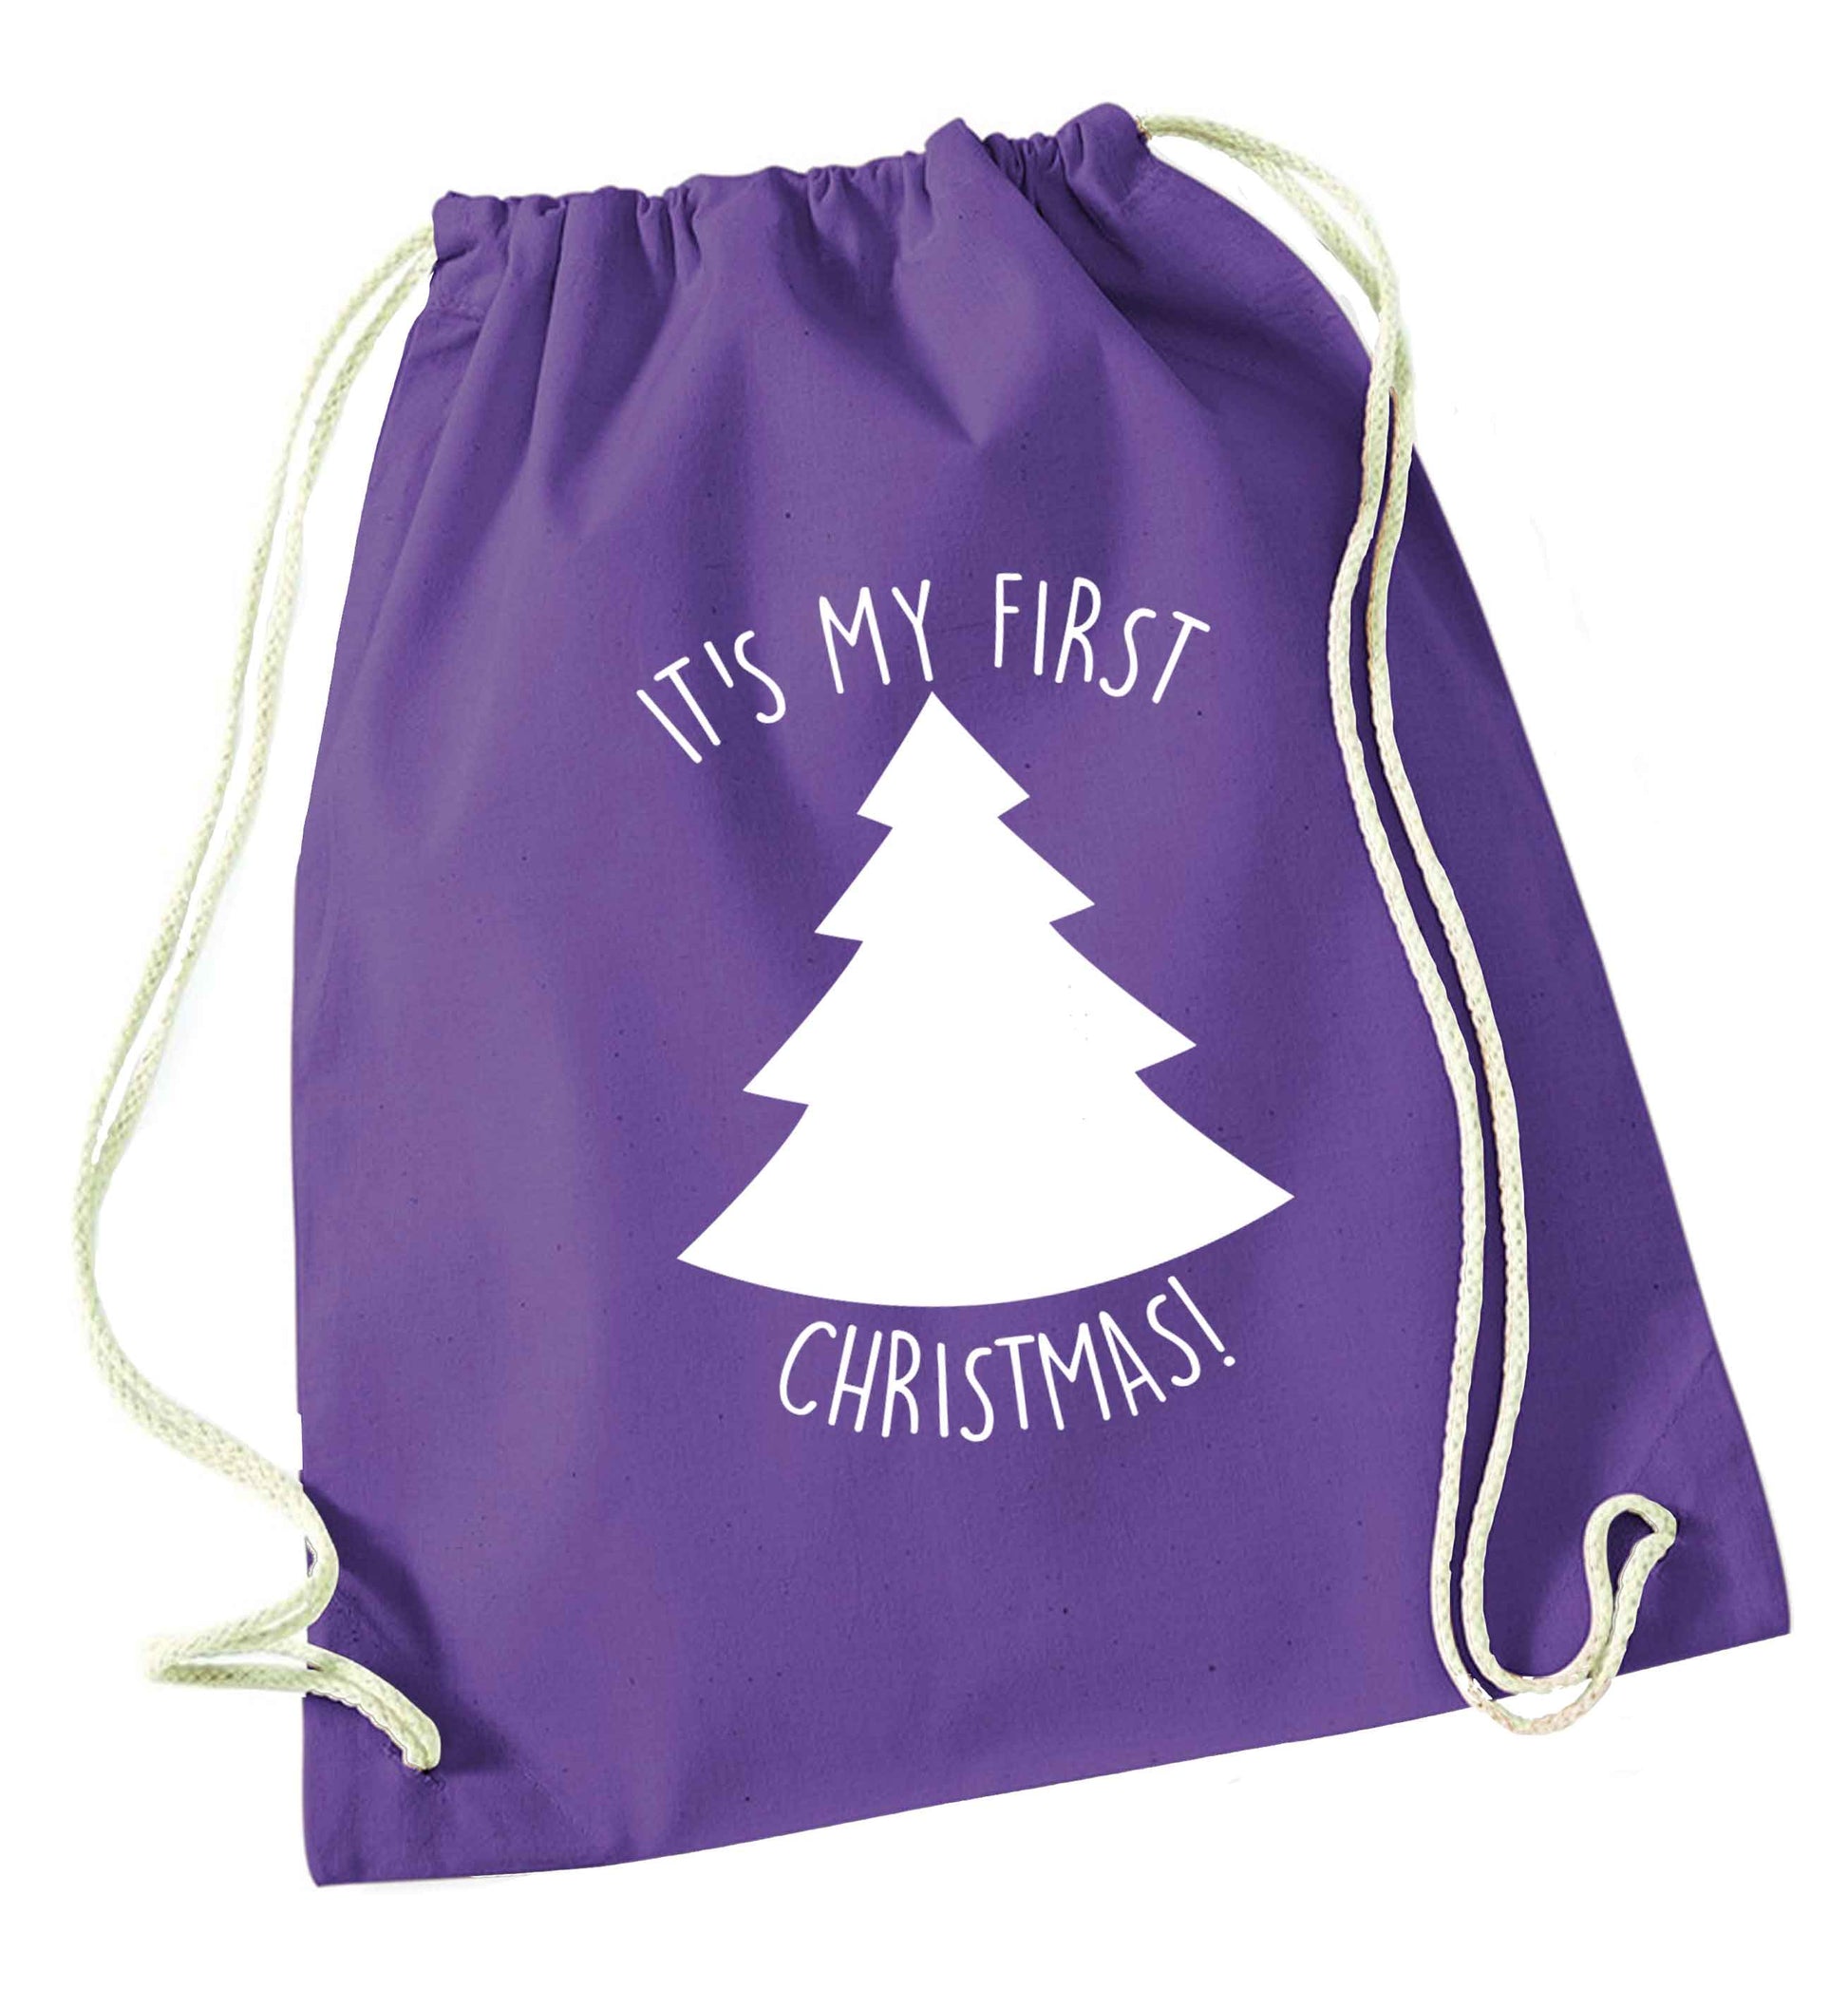 It's my first Christmas - tree purple drawstring bag